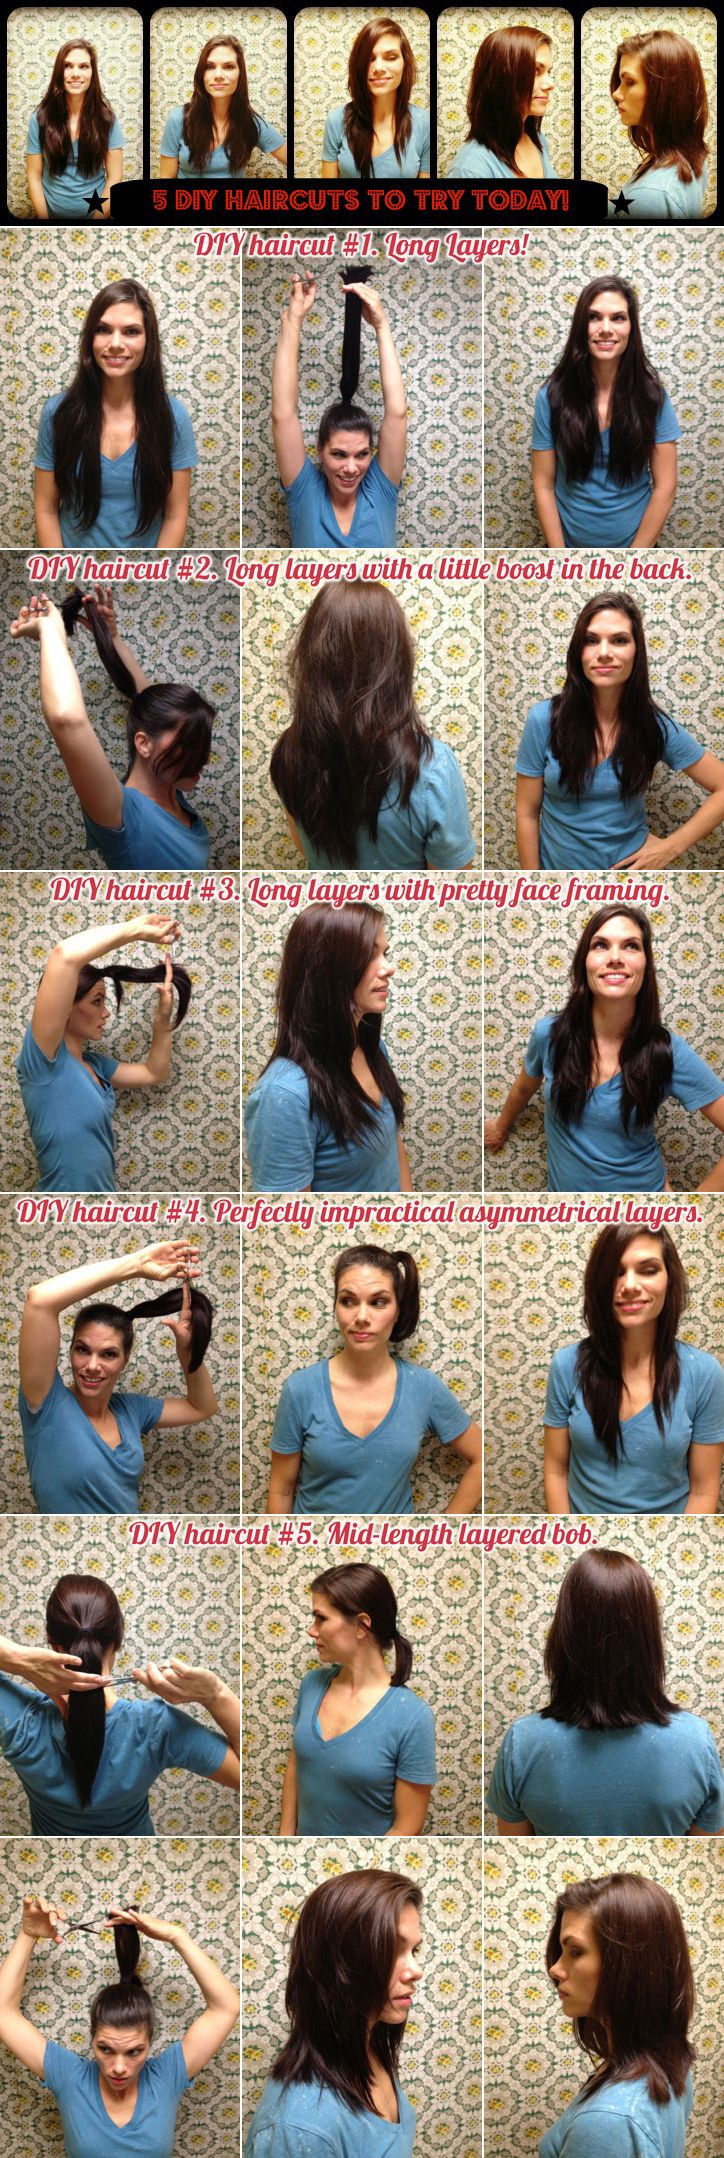 DIY Hair Cut
 Best 20 Diy haircut ideas on Pinterest